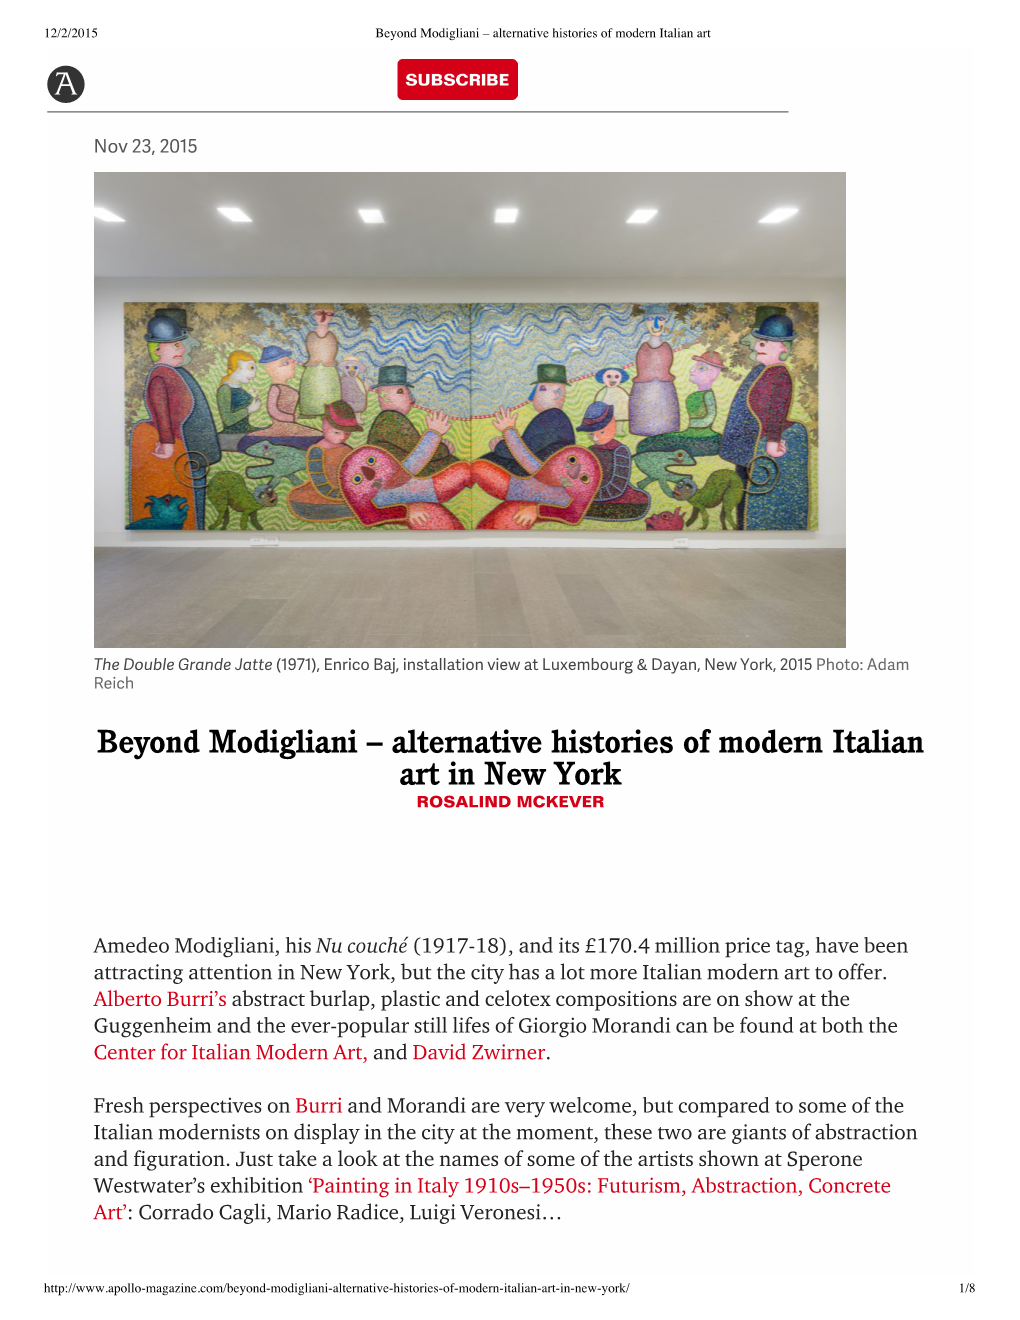 Beyond Modigliani – Alternative Histories of Modern Italian Art in New York ROSALIND MCKEVER